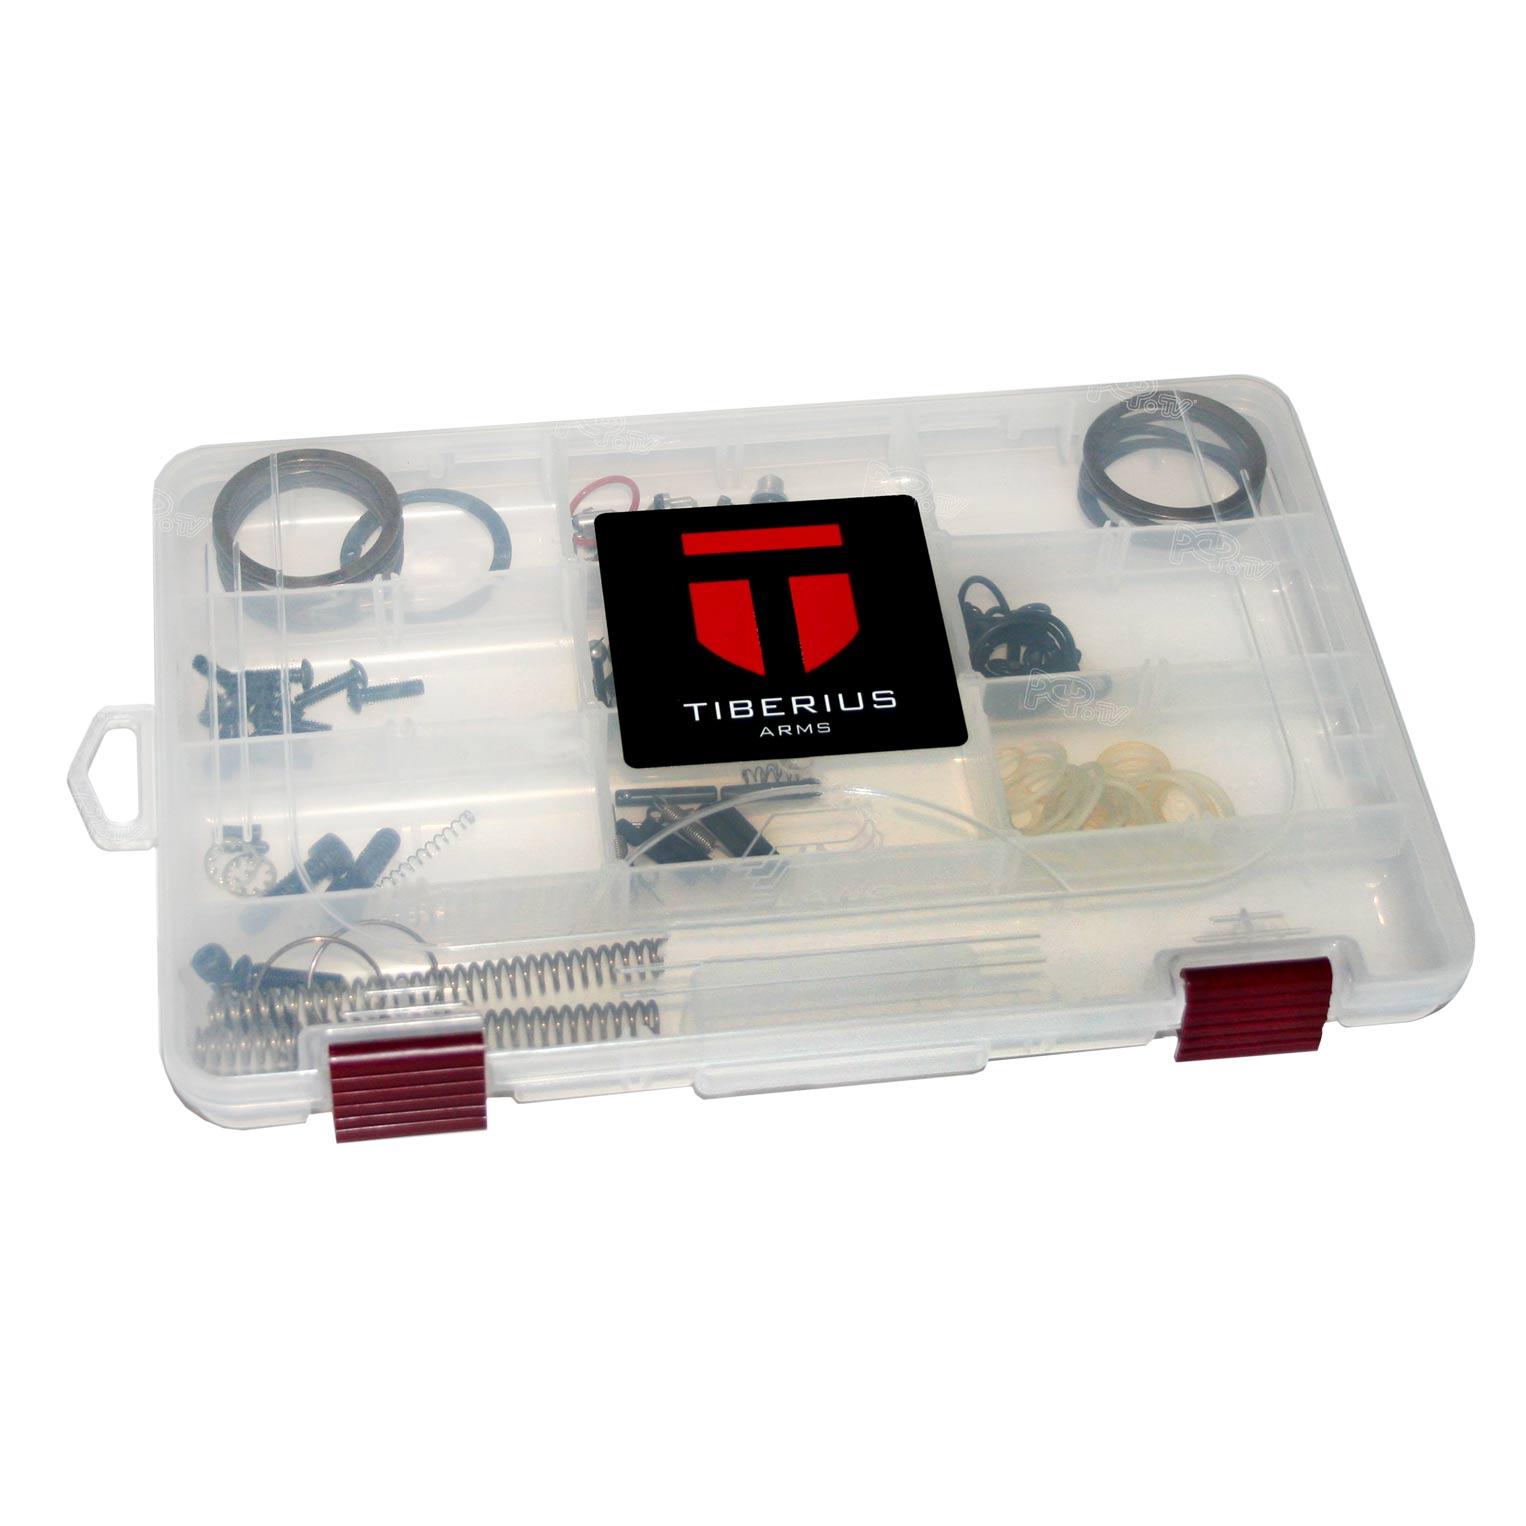 Tiberius T15 Players Parts Kit